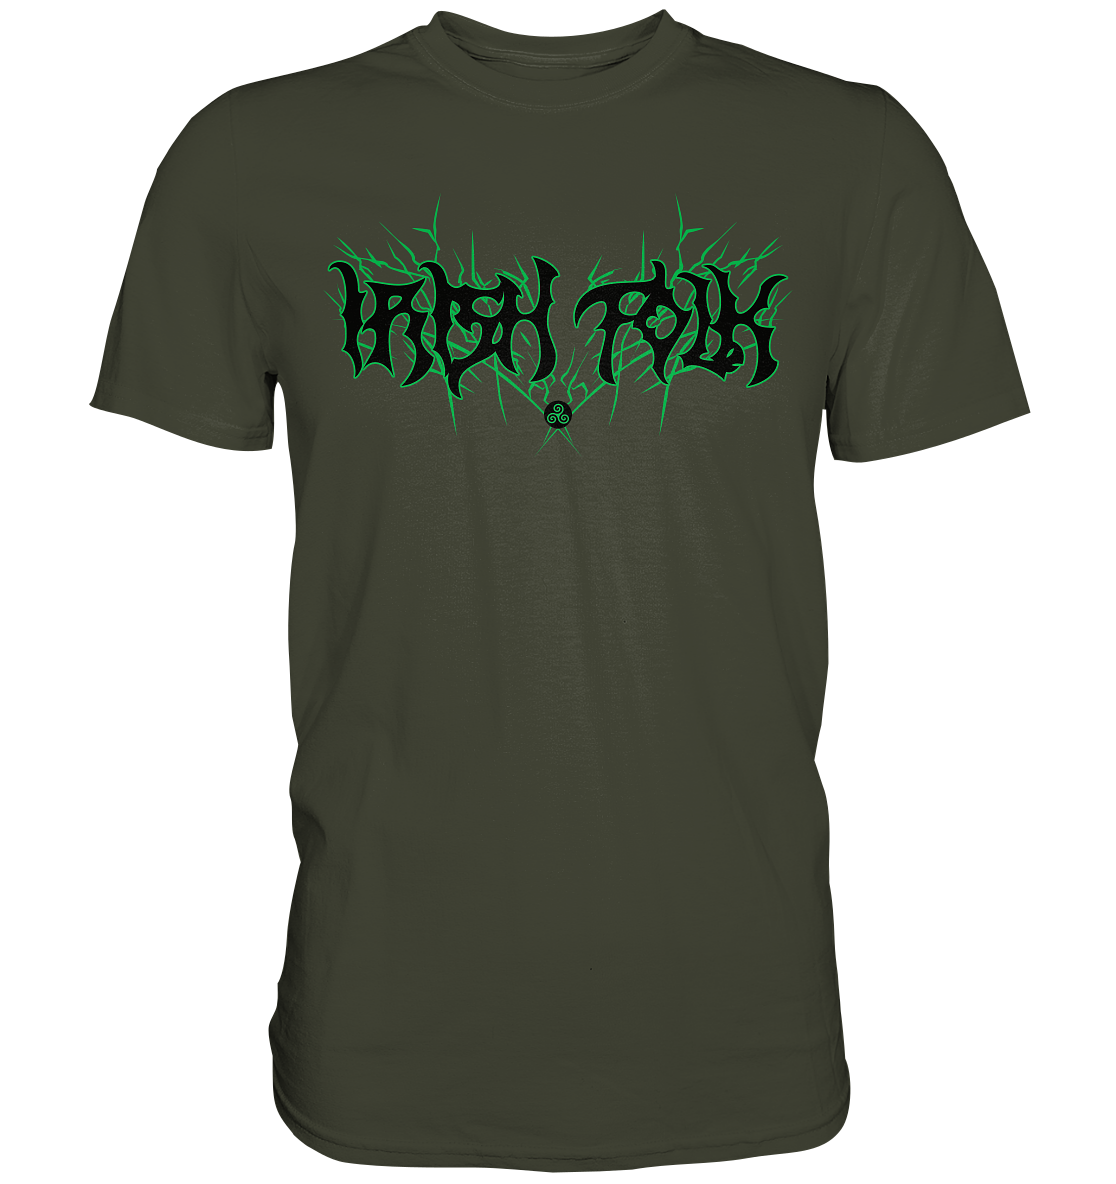 Irish Folk "Metal Band" - Premium Shirt